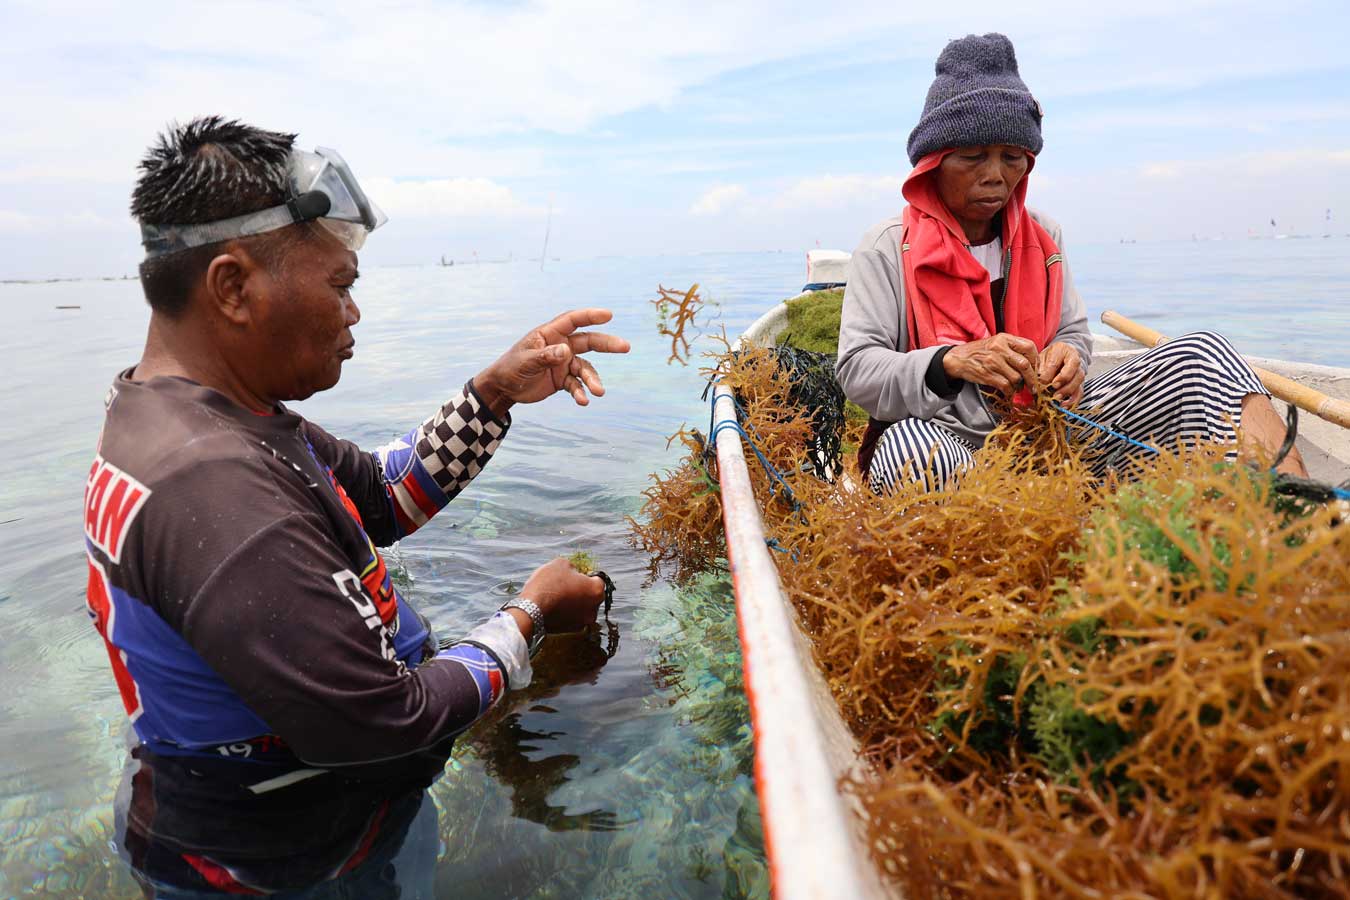 seaweed-farmers-sort-produce-on-boats-in-bali